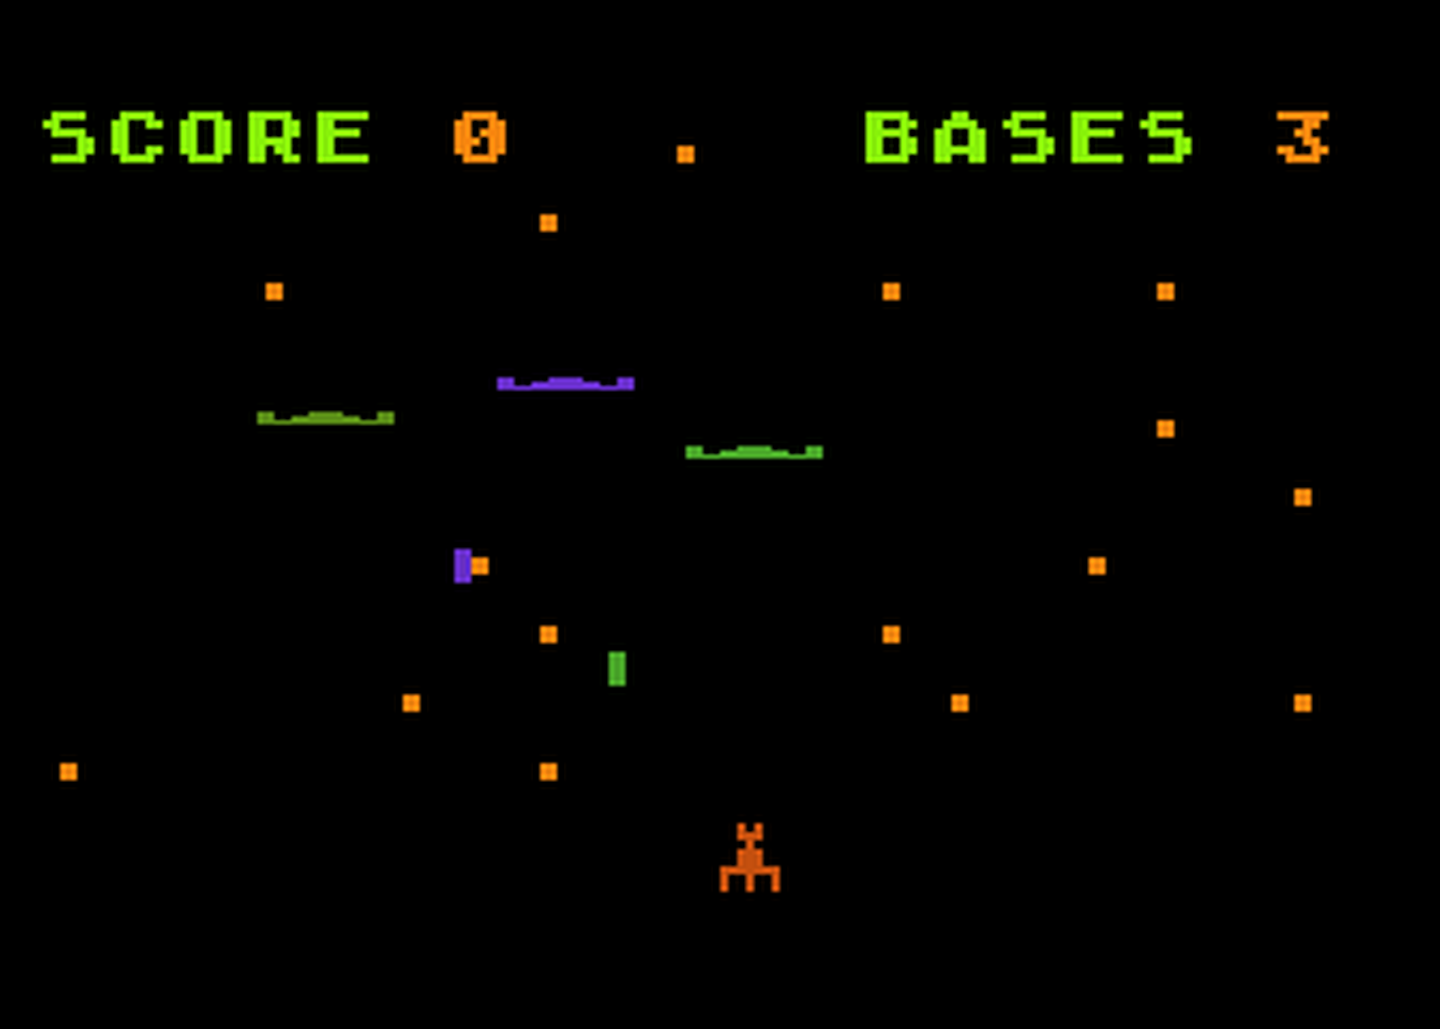 Atari GameBase Saucer_Formation Softside_Publications 1982